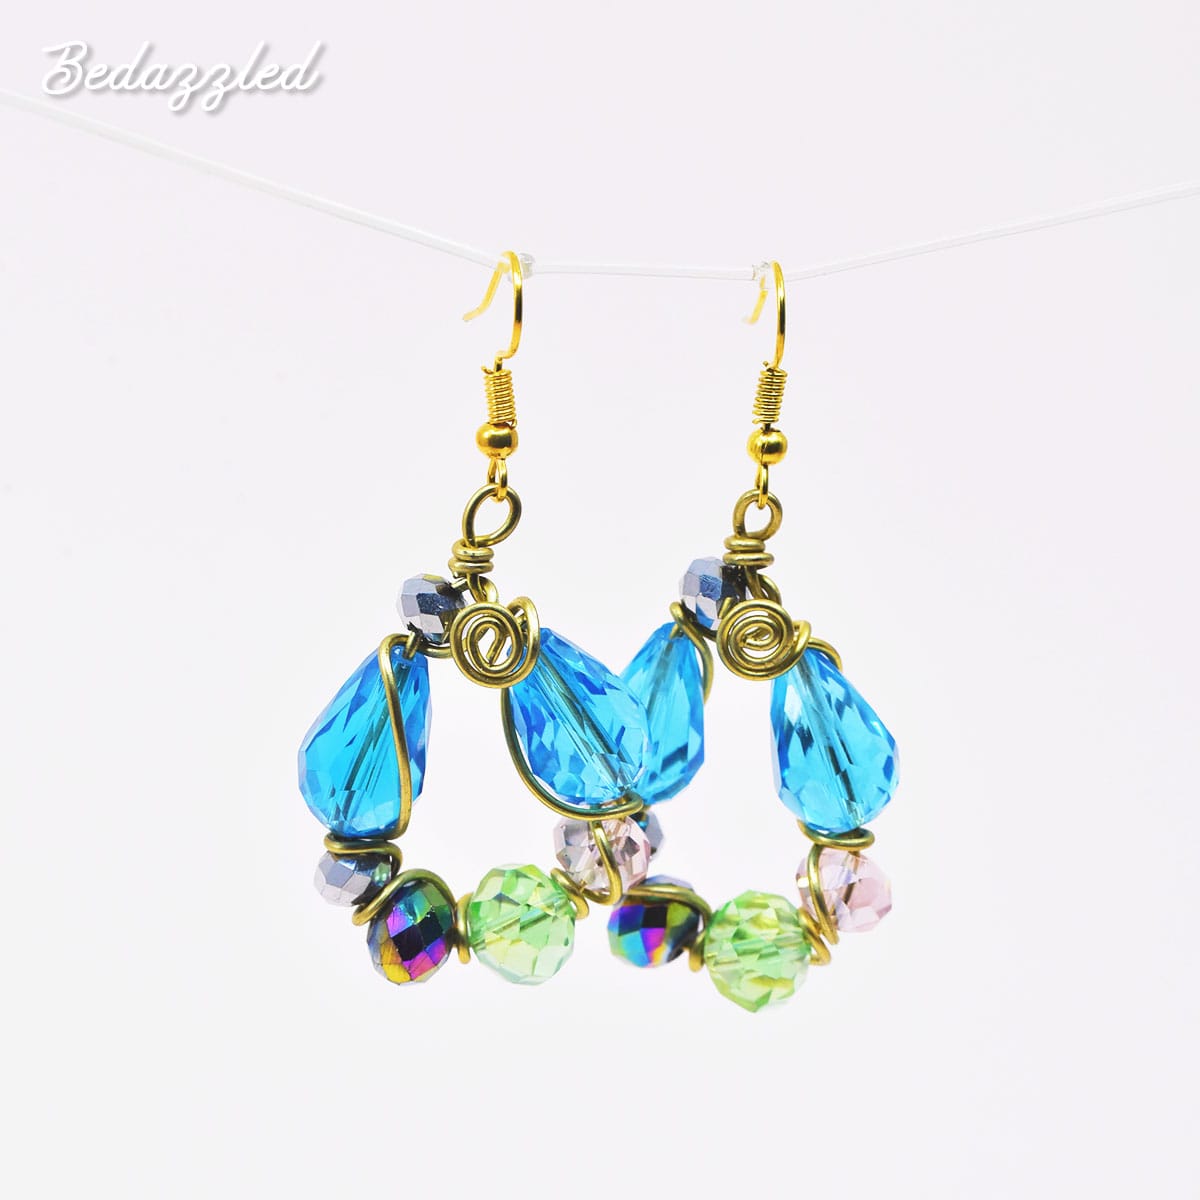 Bejeweled Style 2 - Earrings